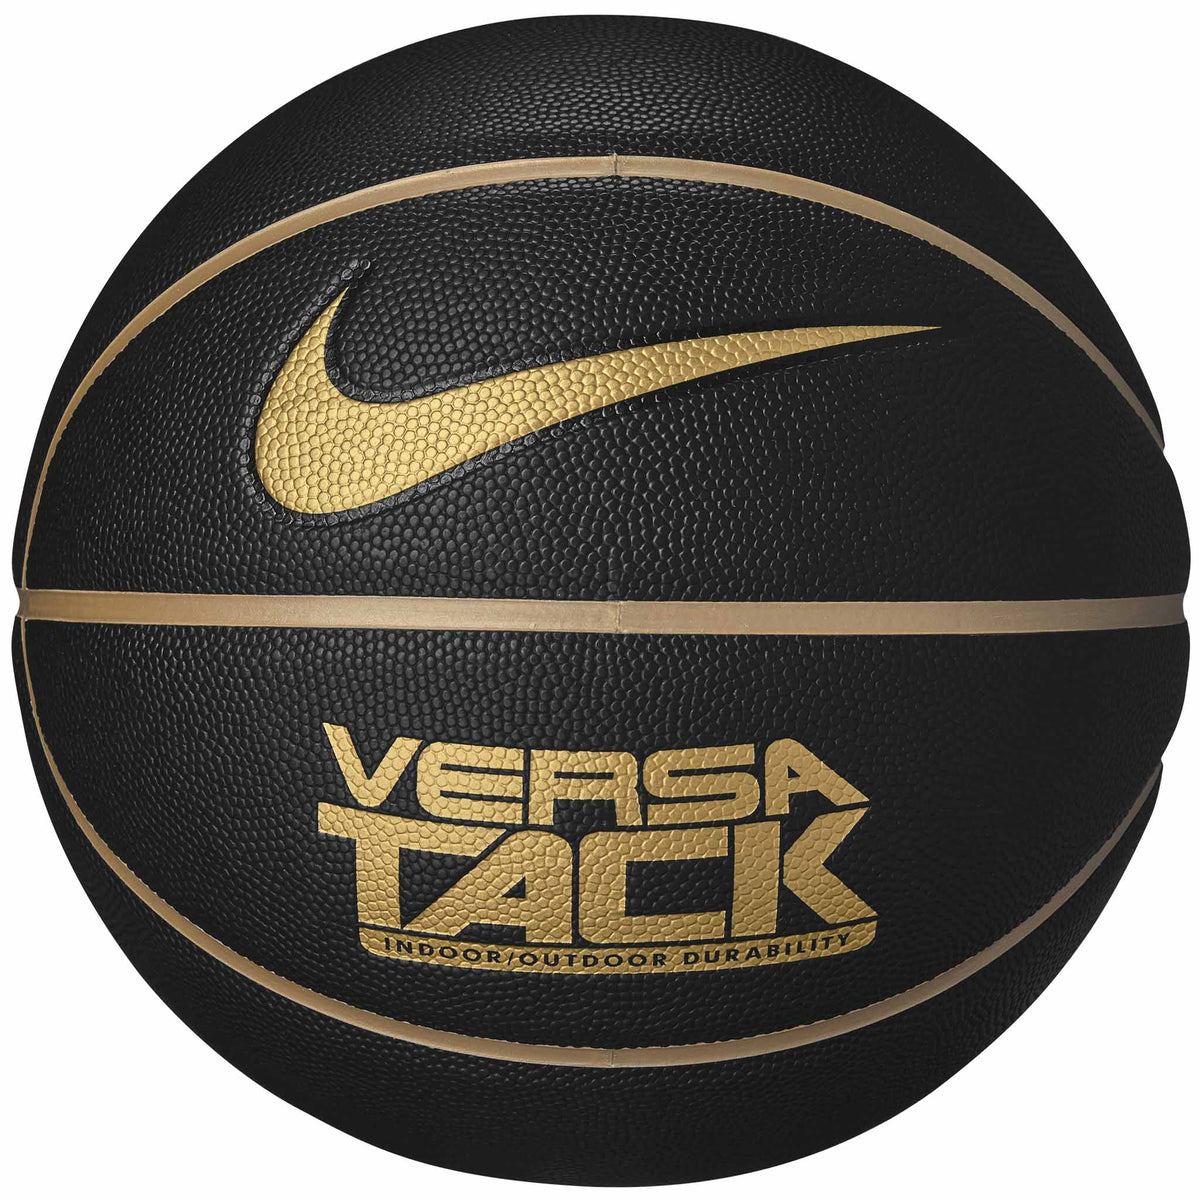 Nike Versa Tack 8P Ballon de basketball Black / Metallic Gold / Black